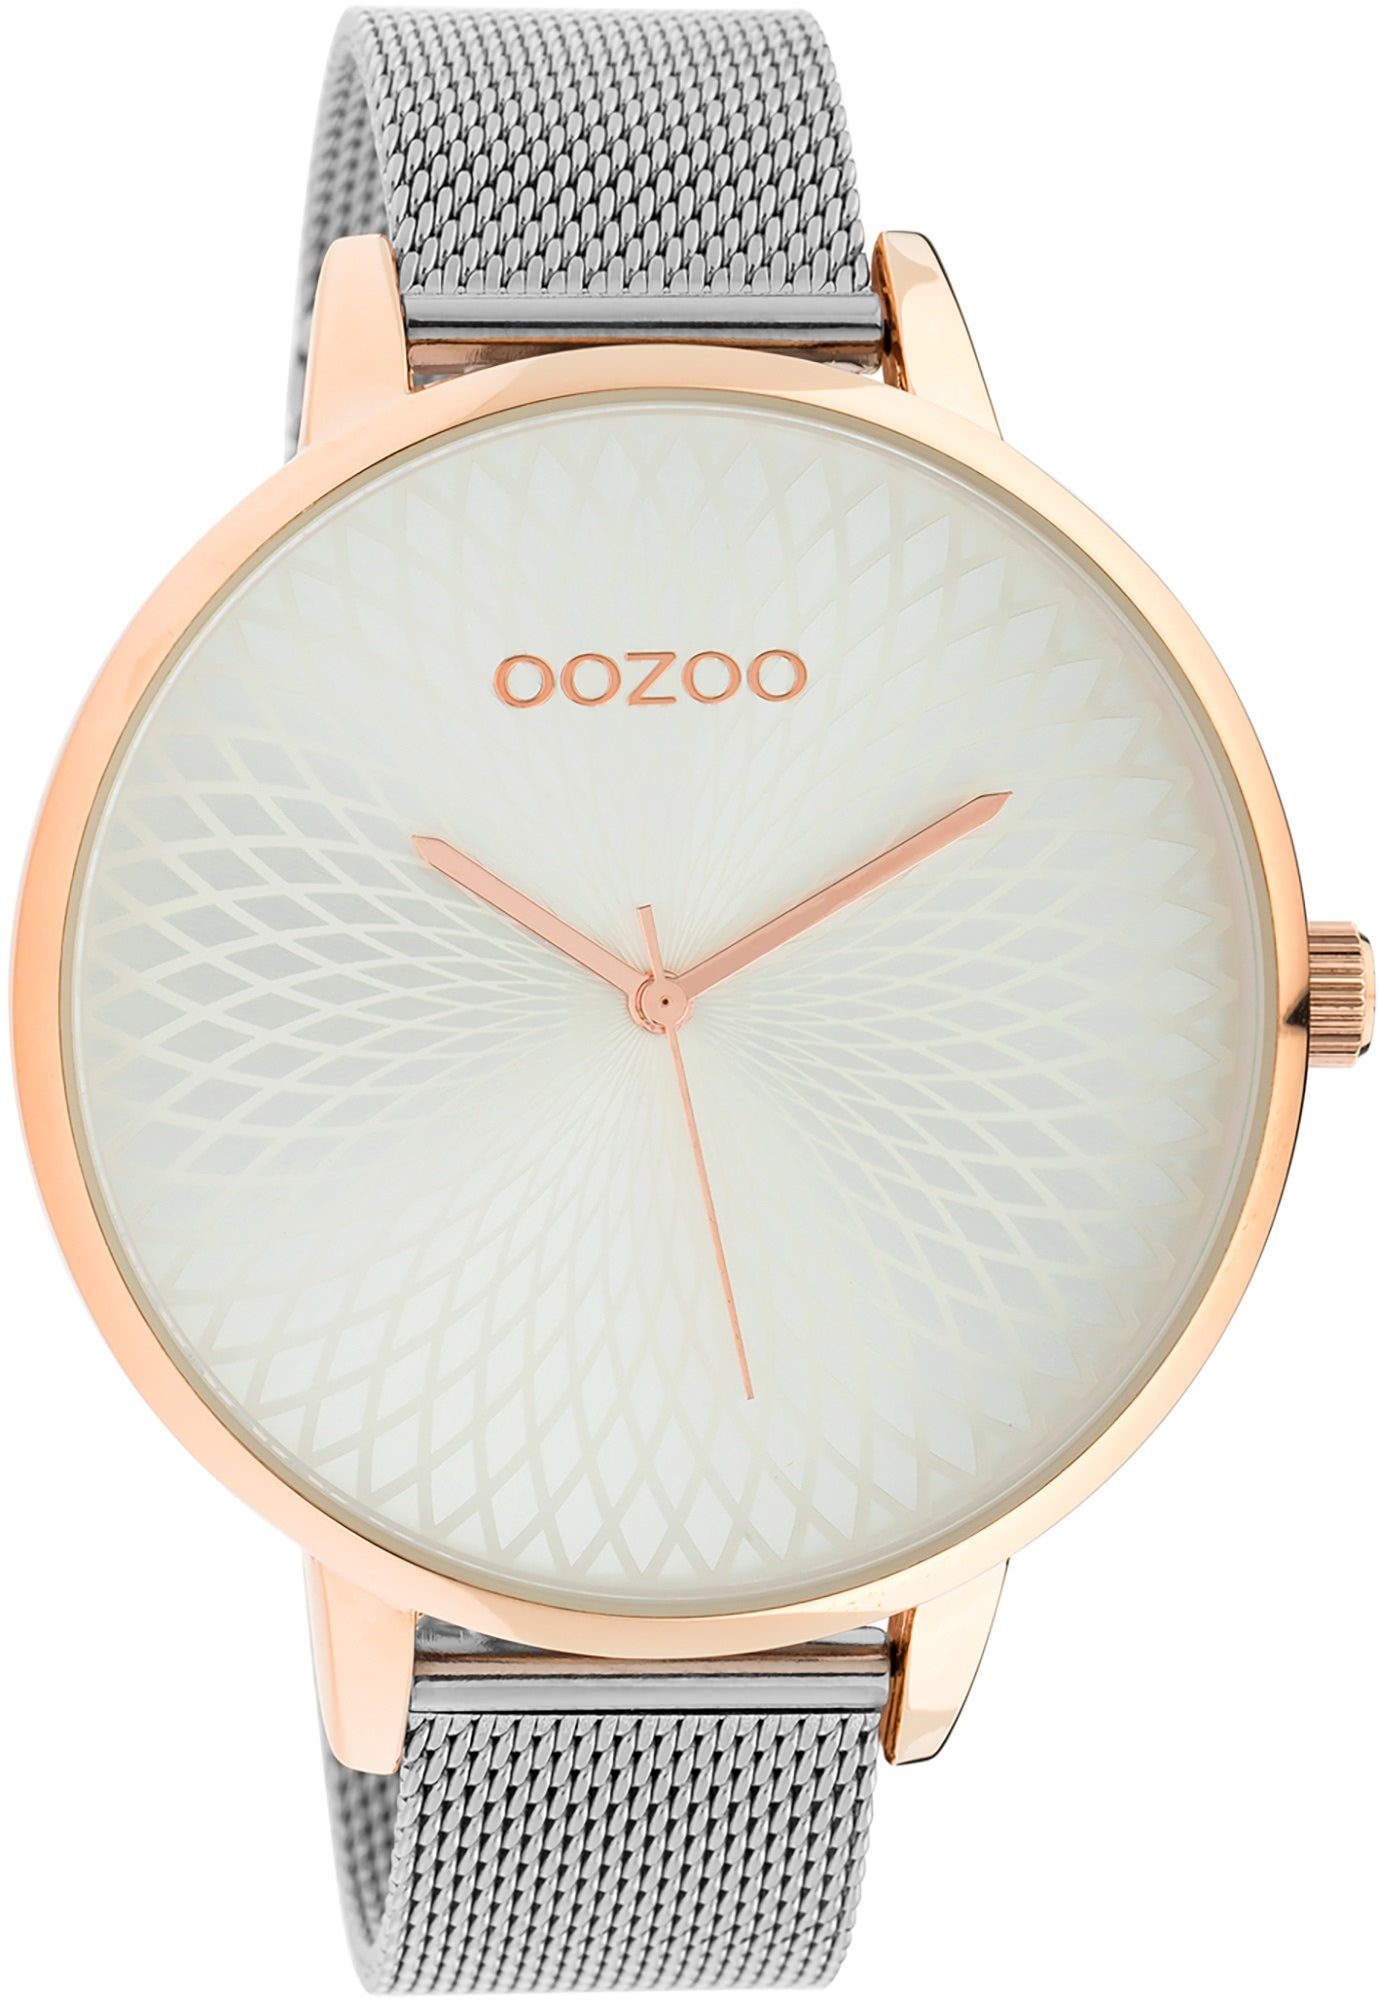 OOZOO Quarzuhr Oozoo Damen Armbanduhr silber Analog, Damenuhr rund, extra groß (ca. 48mm) Edelstahlarmband, Fashion-Style